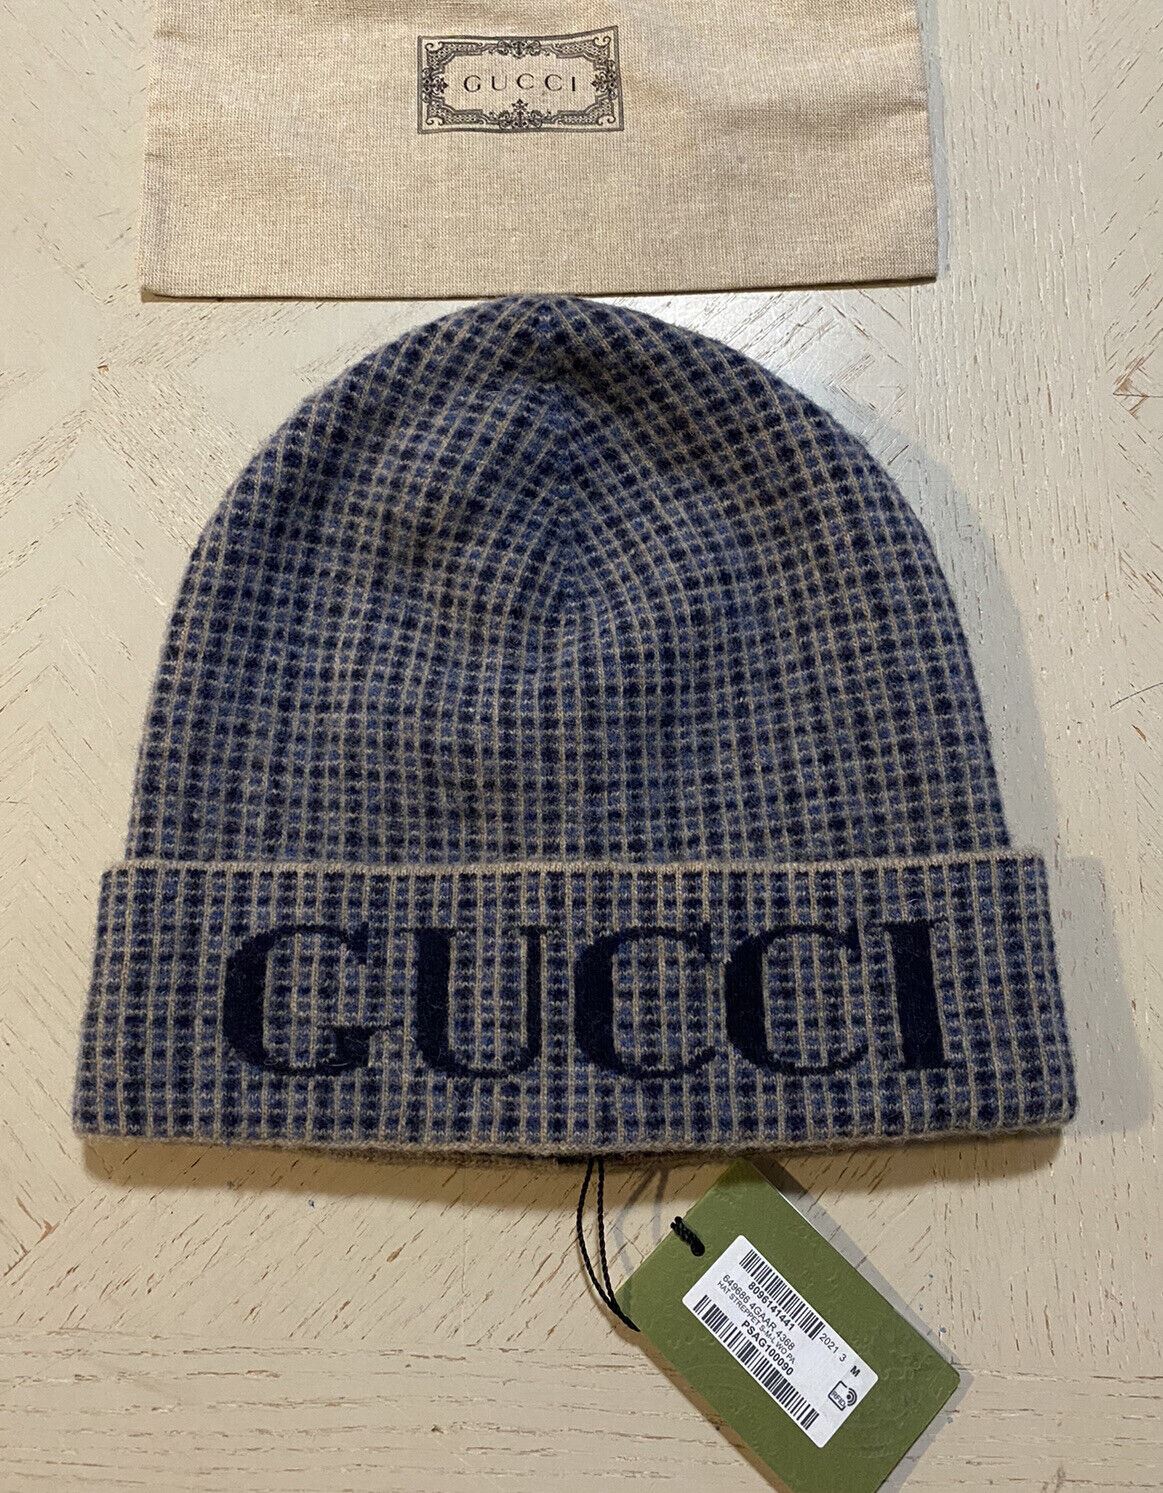 NWT Gucci Beanie Gucci Monogram Hat Brown/Black Size M Italy